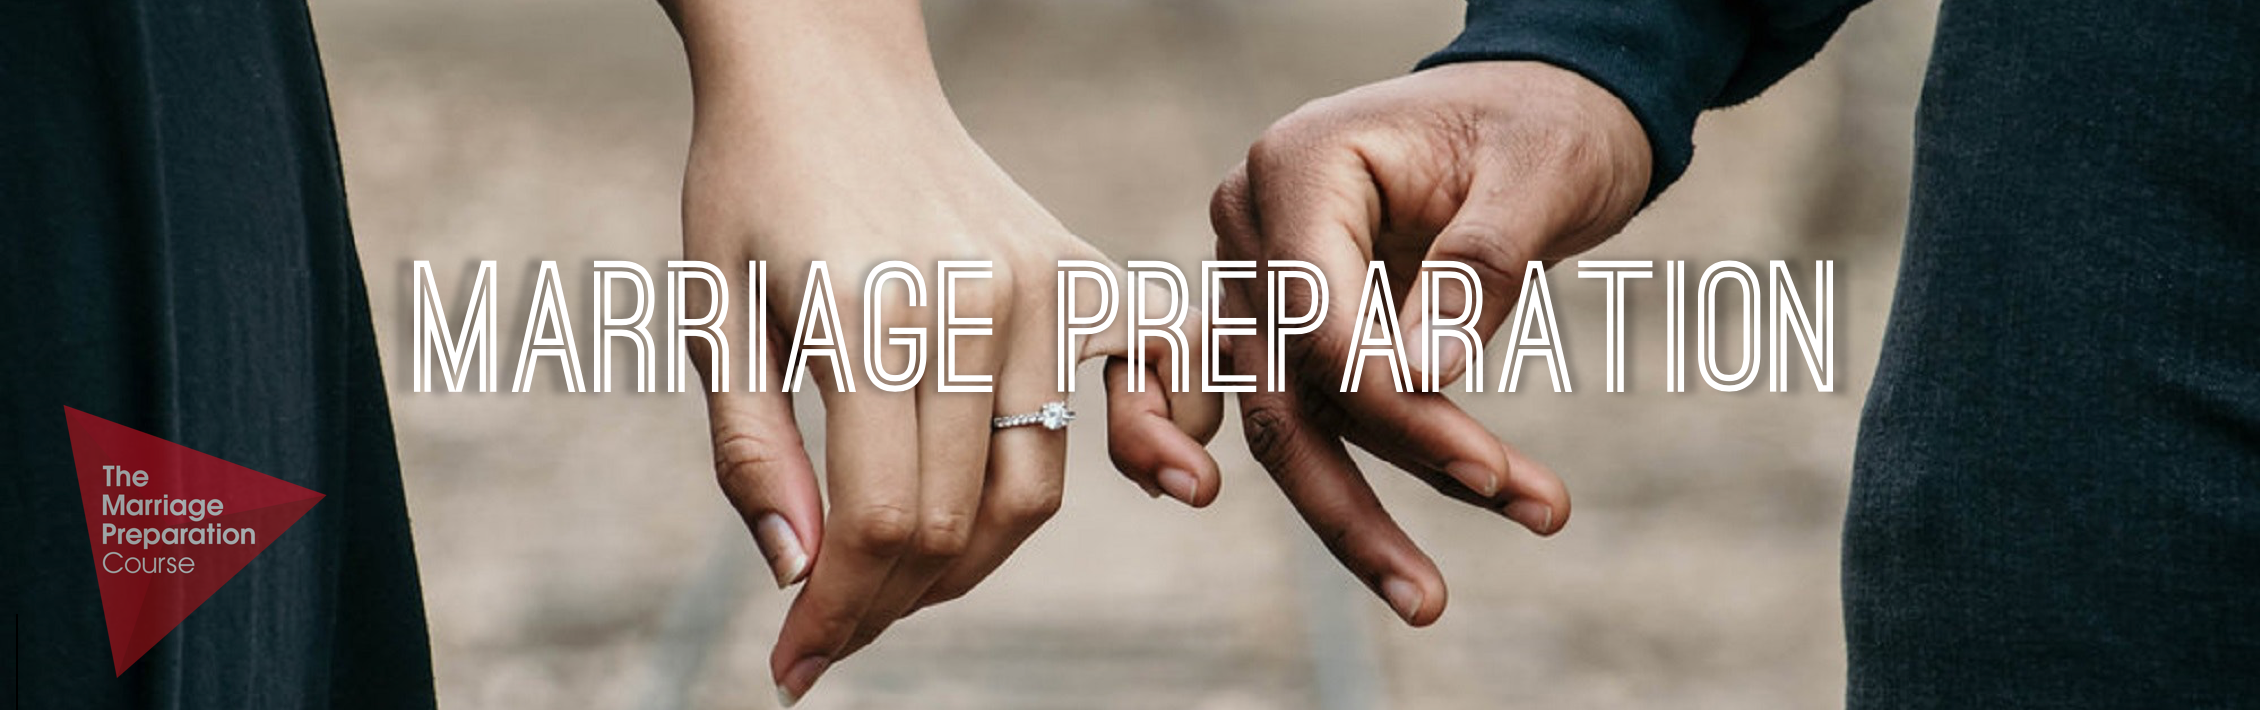 Course marriage online free preparation $14.97 Florida